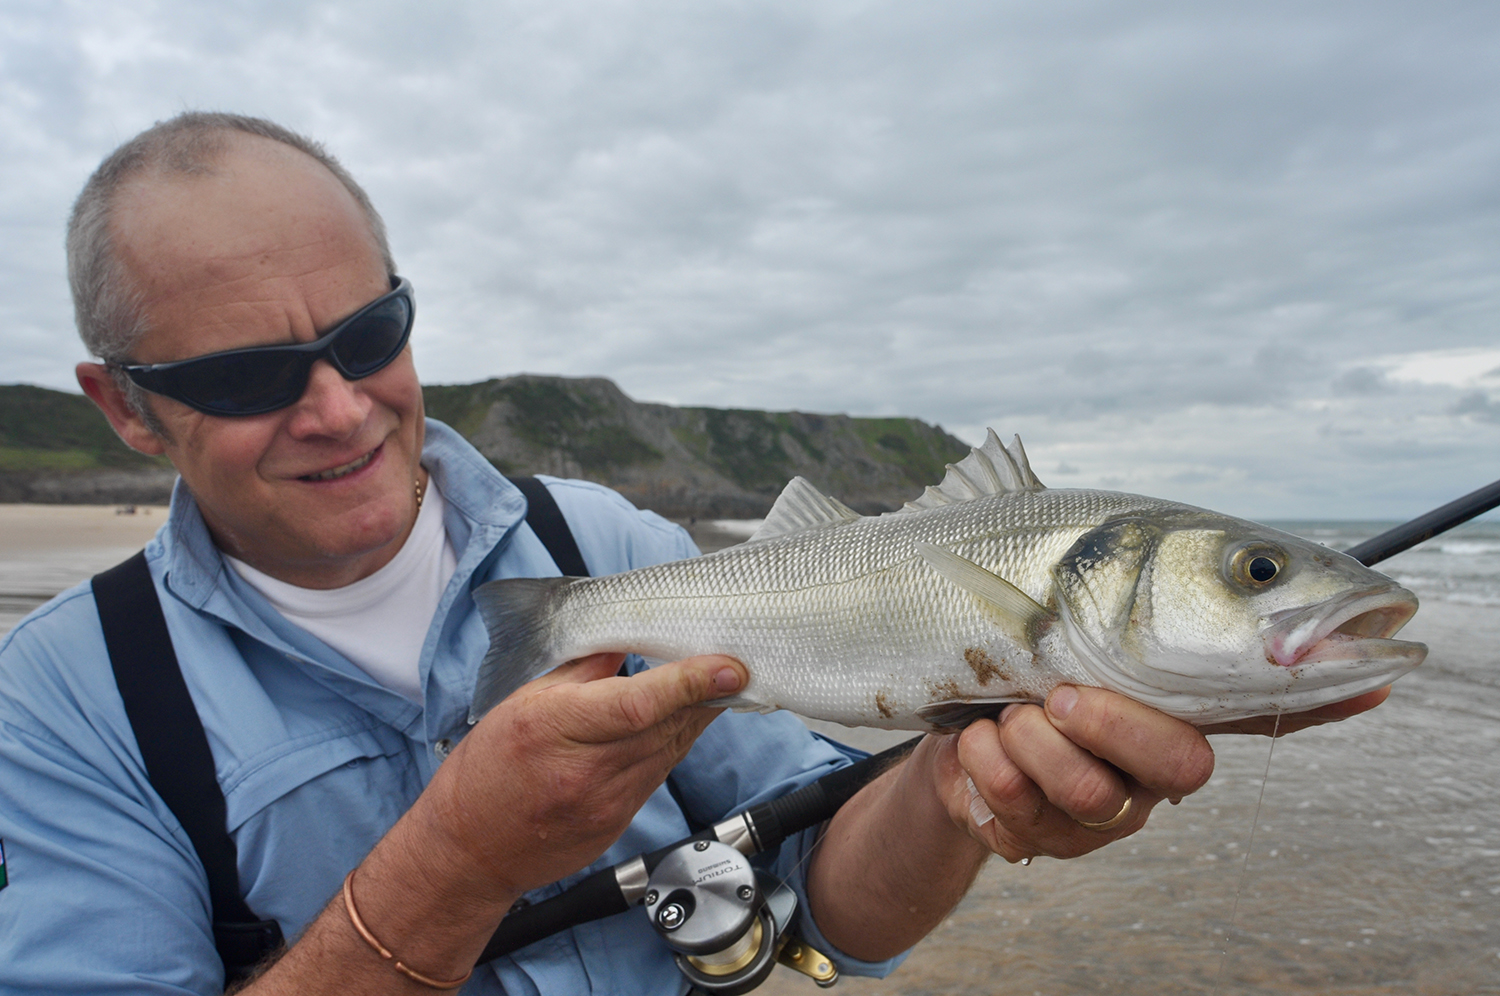 Man holding fish caught at Three Cliffs Bay